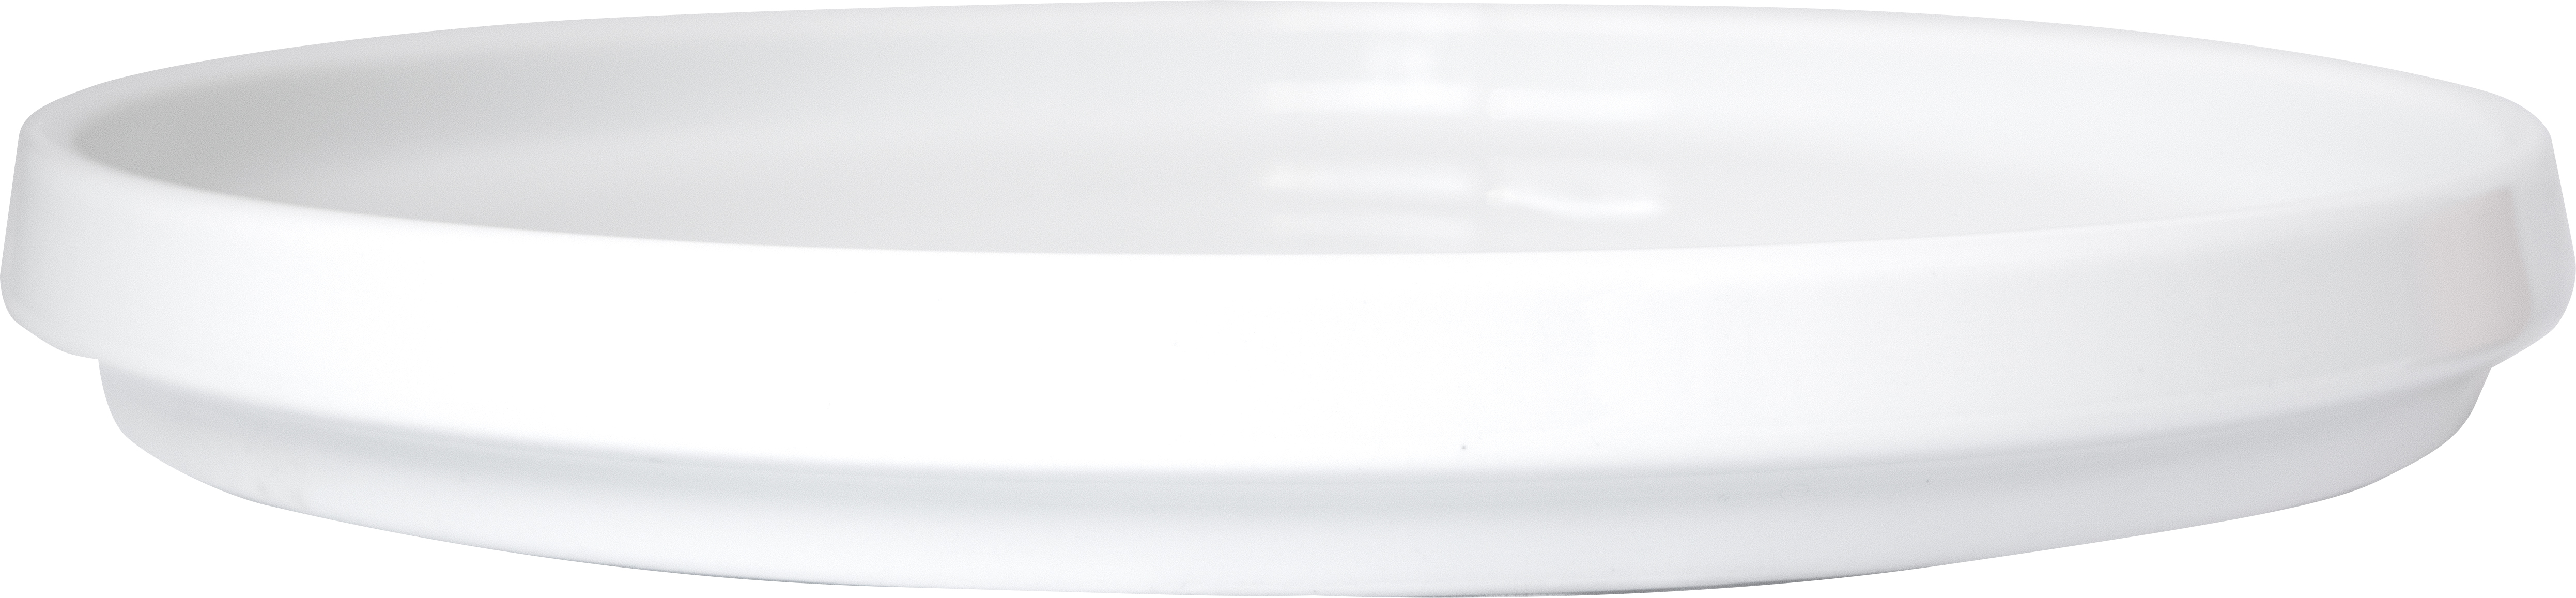 Torino™ Stak Deep Plate (European White)